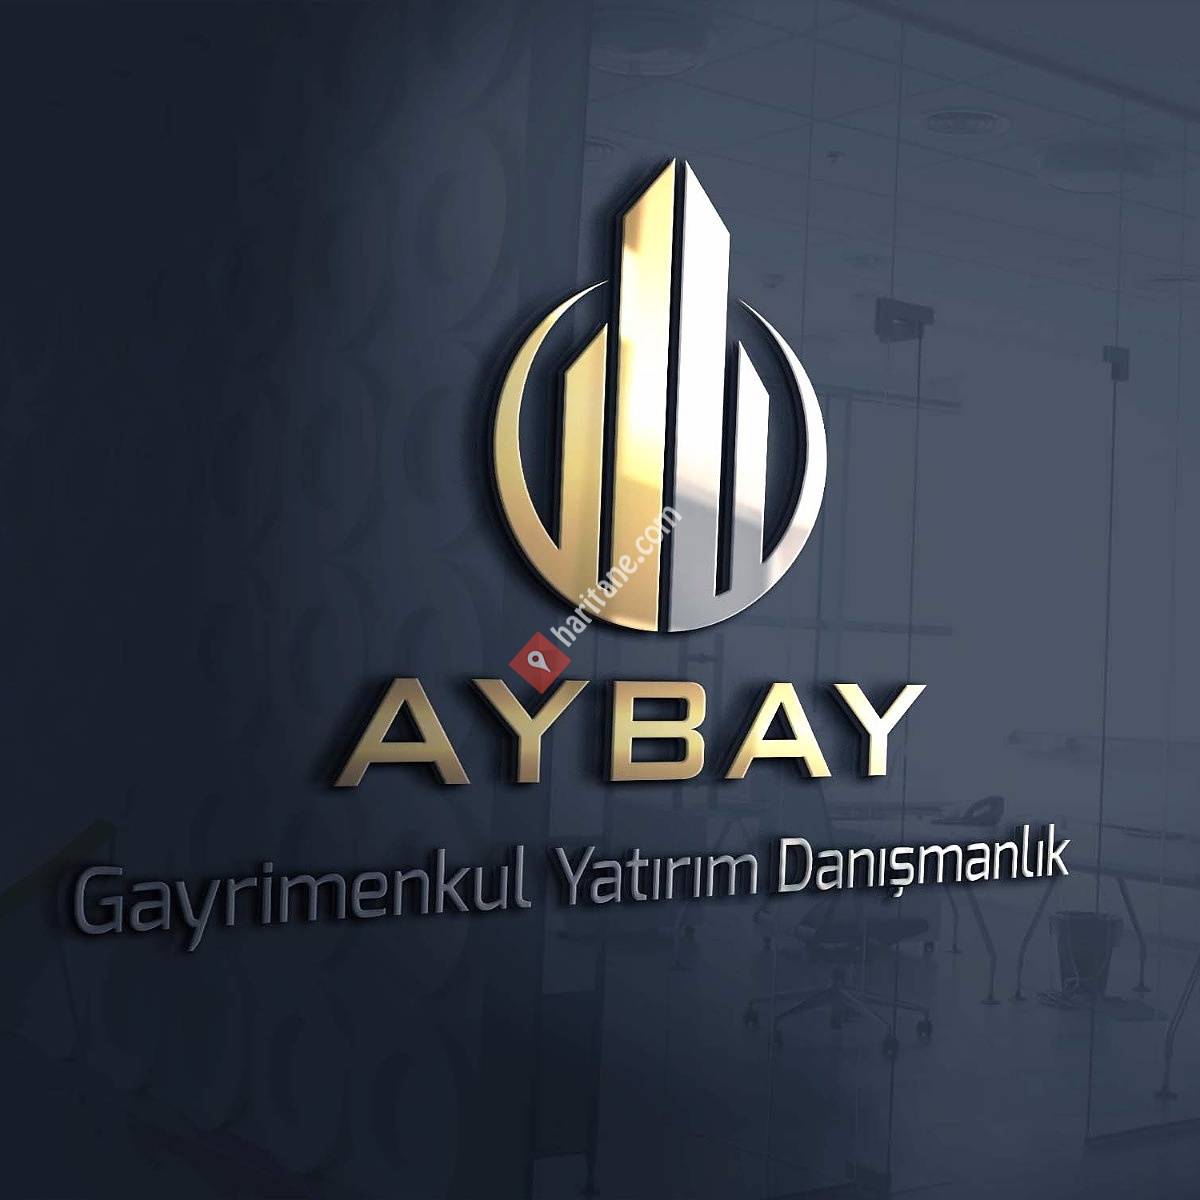 Aybay Gayrimenkul